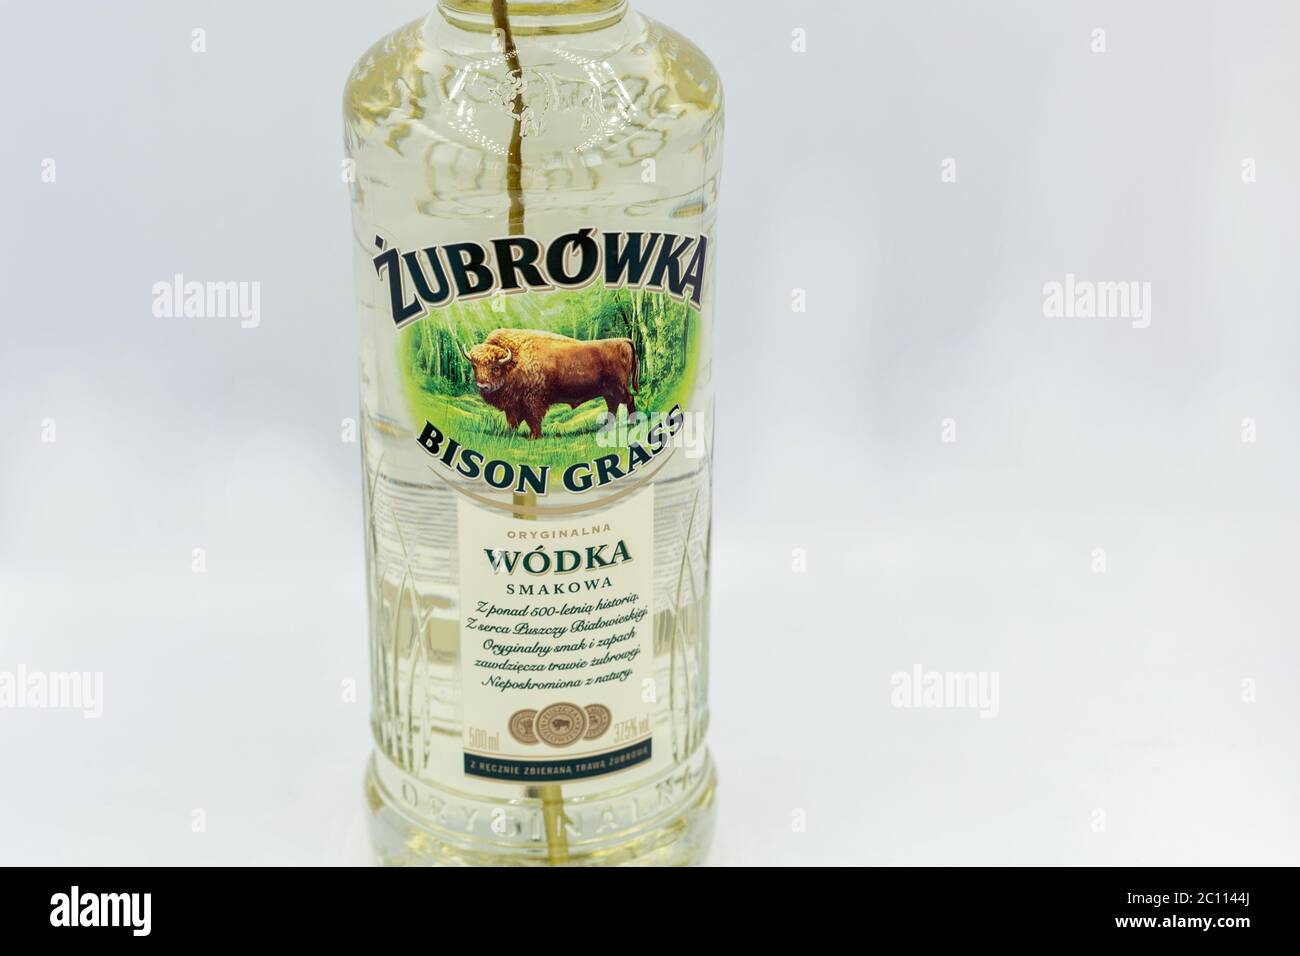 KYIV, UKRAINE - JUNE 06, 2020: Zubrowka Bison Grass vodka bottle closeup against white background. It is a flavored Polish vodka liqueur, which contai Stock Photo